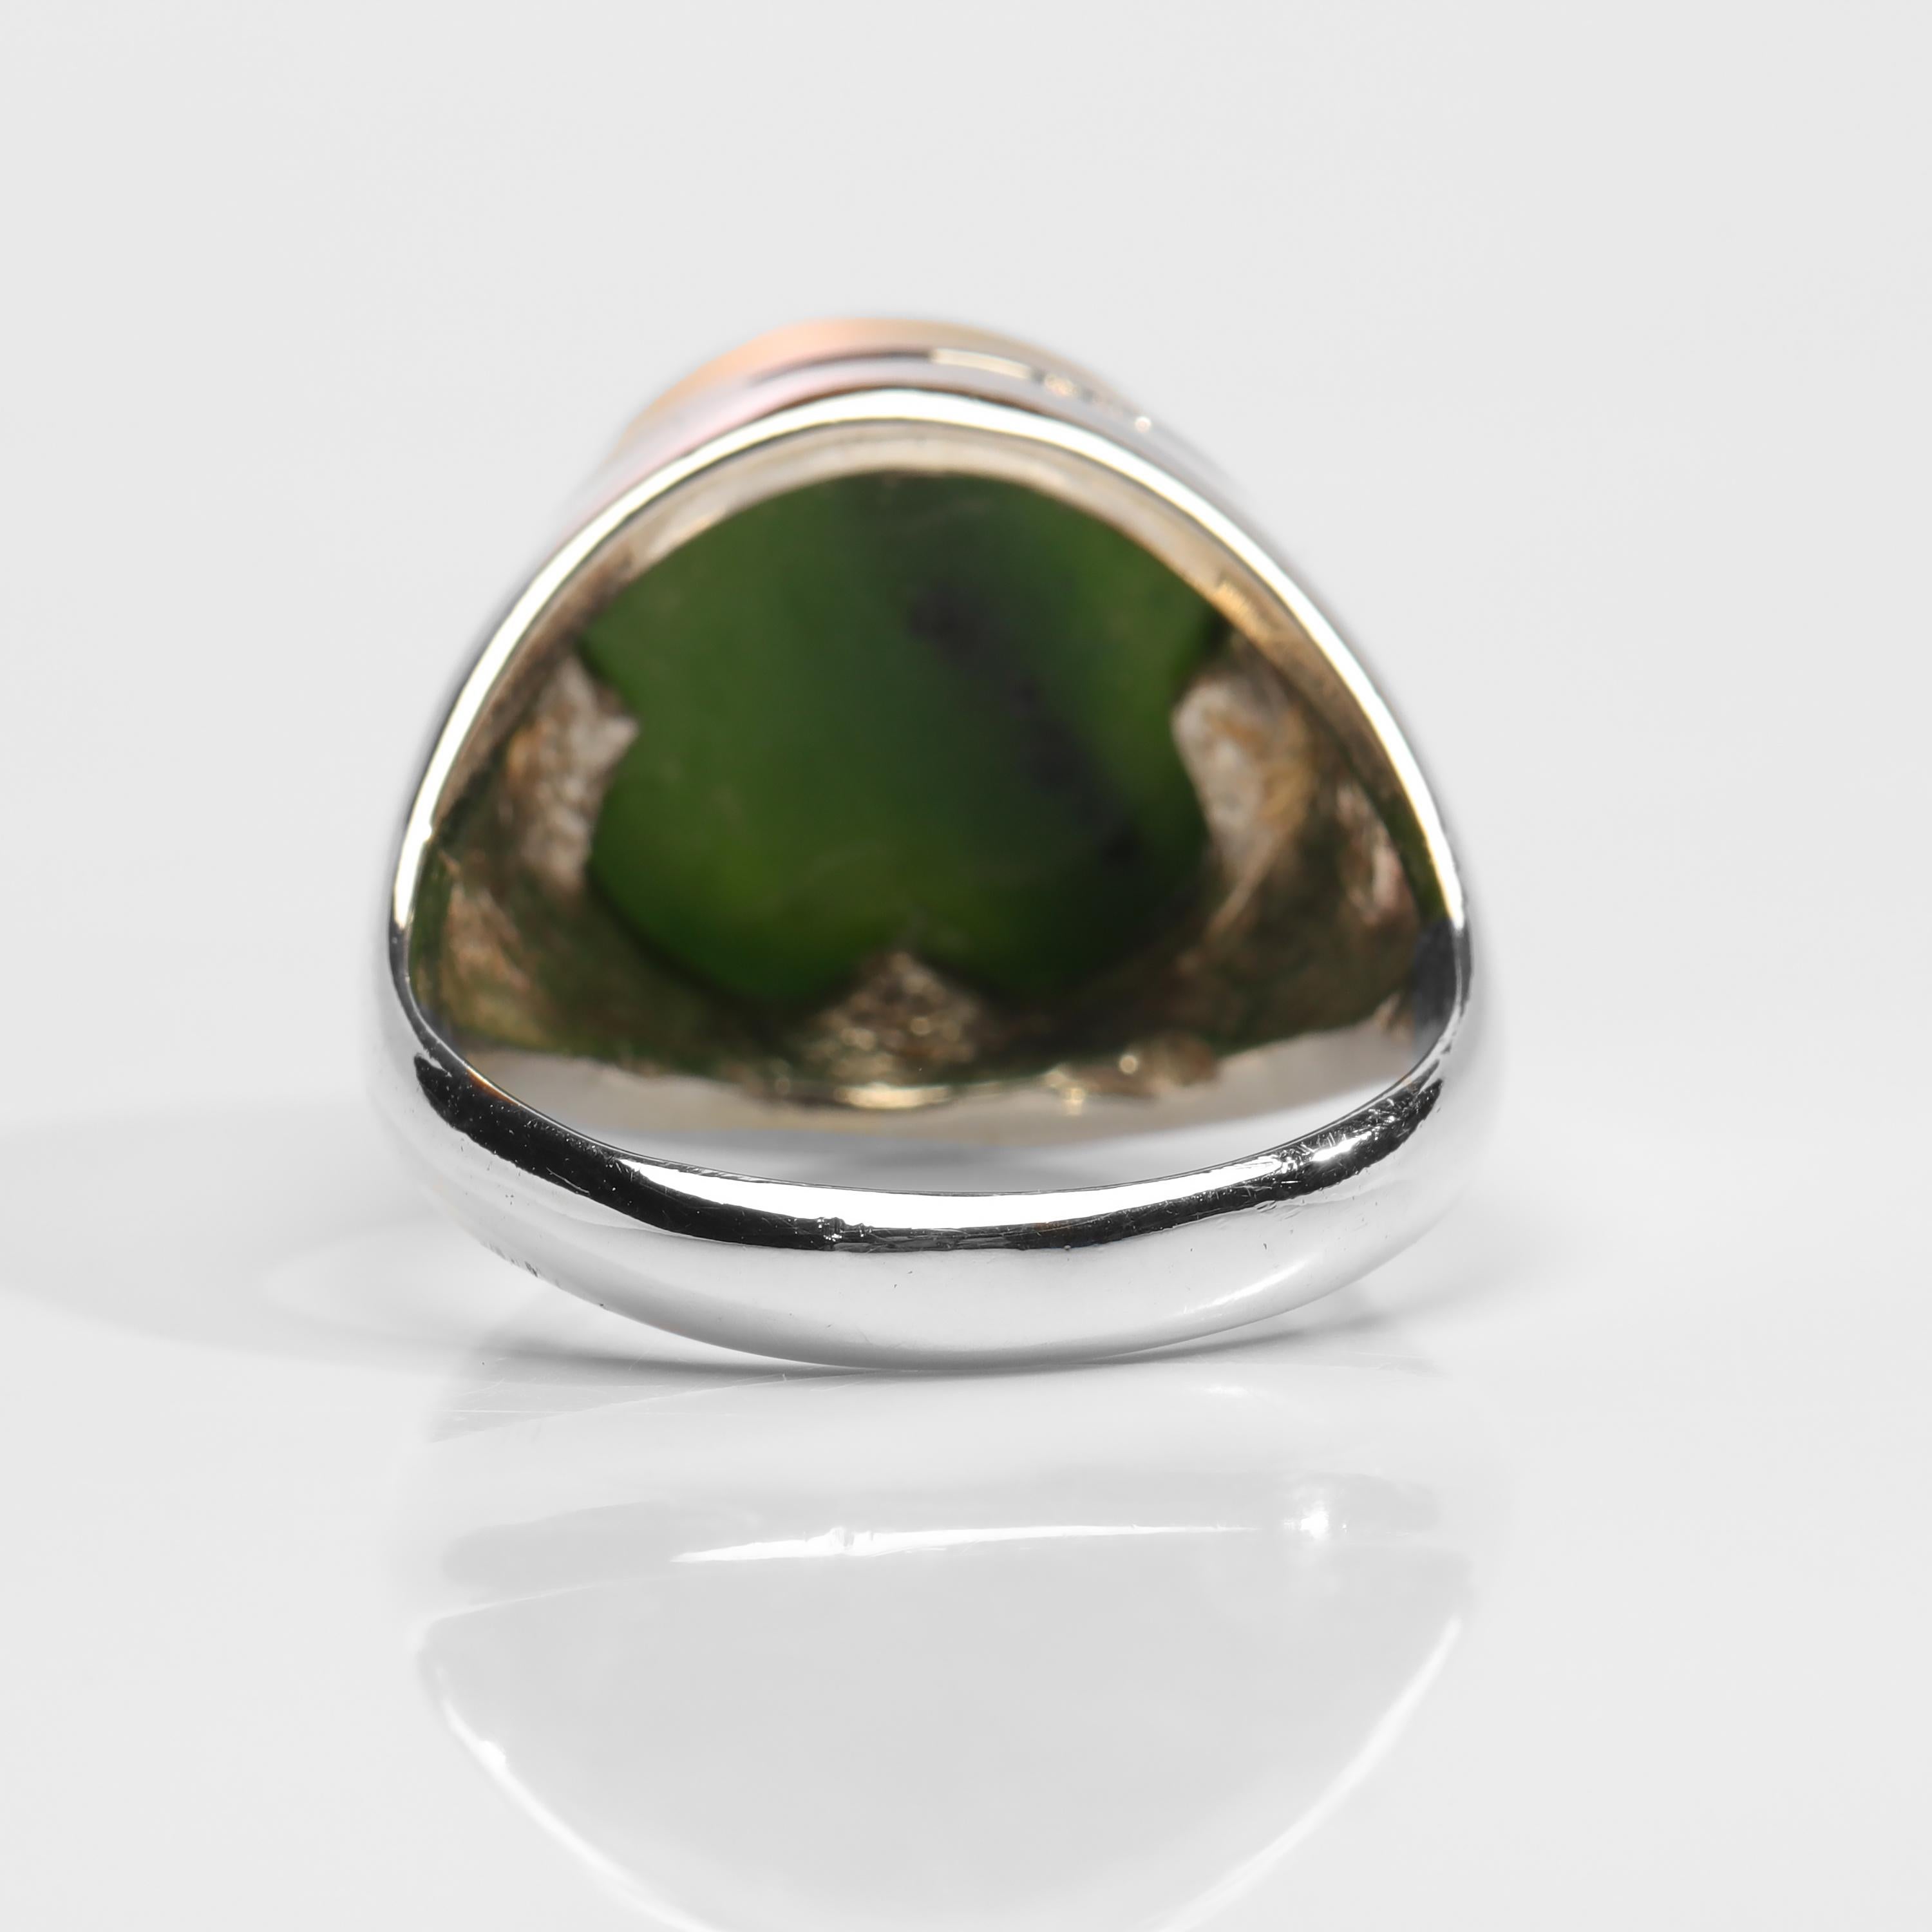 Artisan British Columbian Jade Ring in Silver and Gold